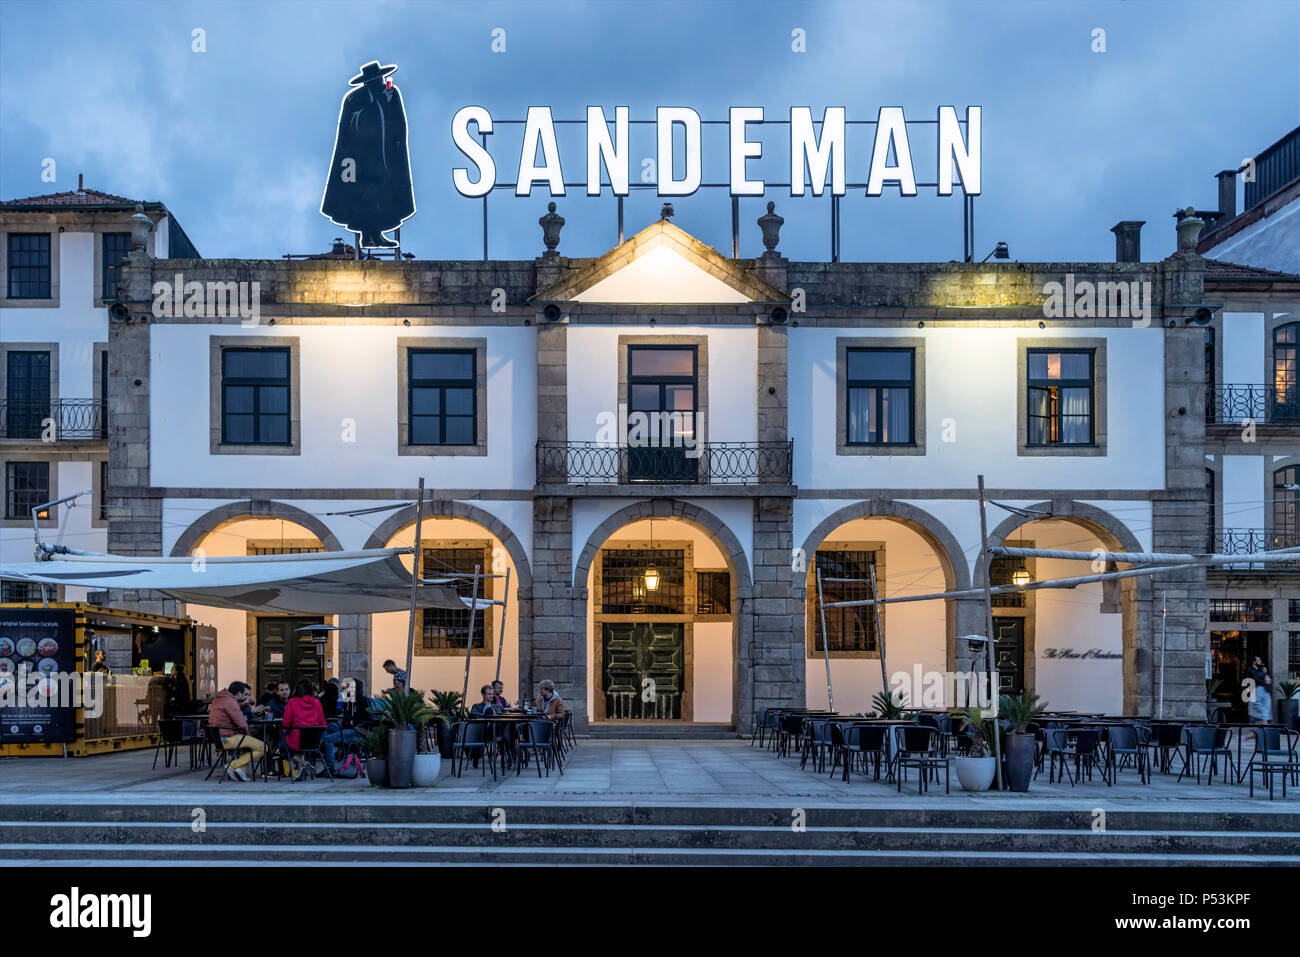 The House of Sandeman, Ribeira da Gaia, Porto, Portugal Stock Photo - Alamy